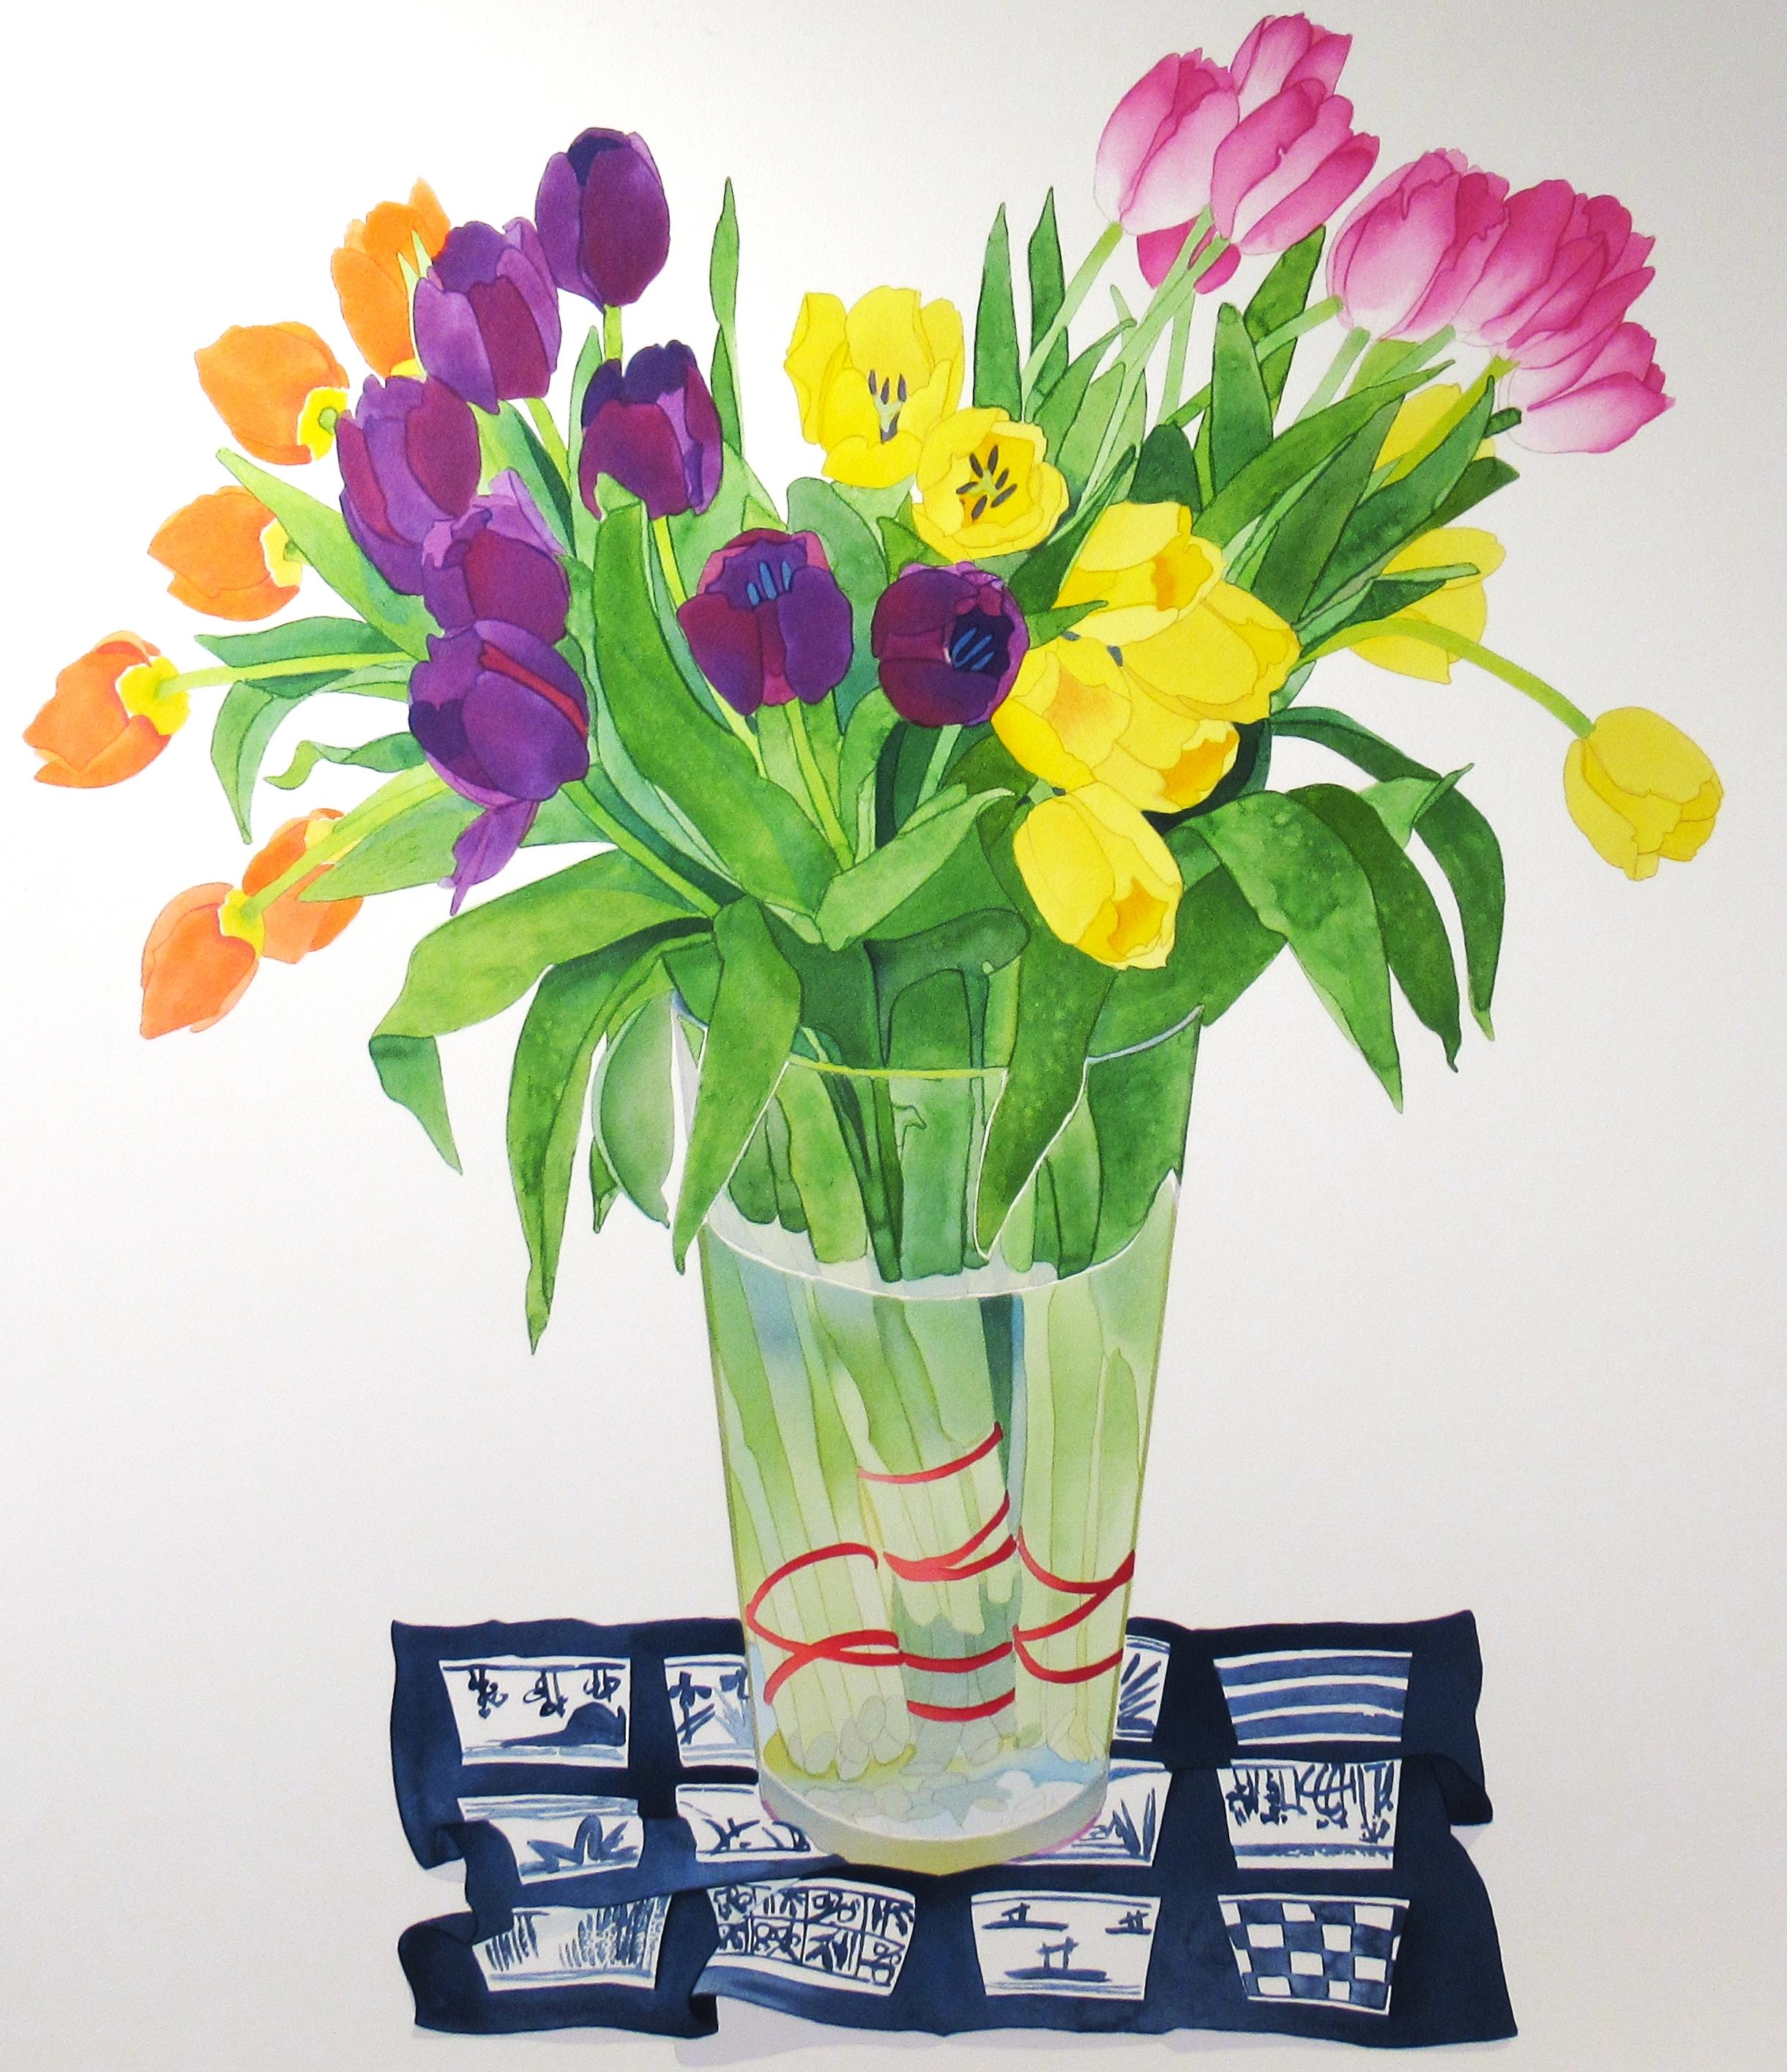 Tulips in a Vase - Print by Gary Bukovnik